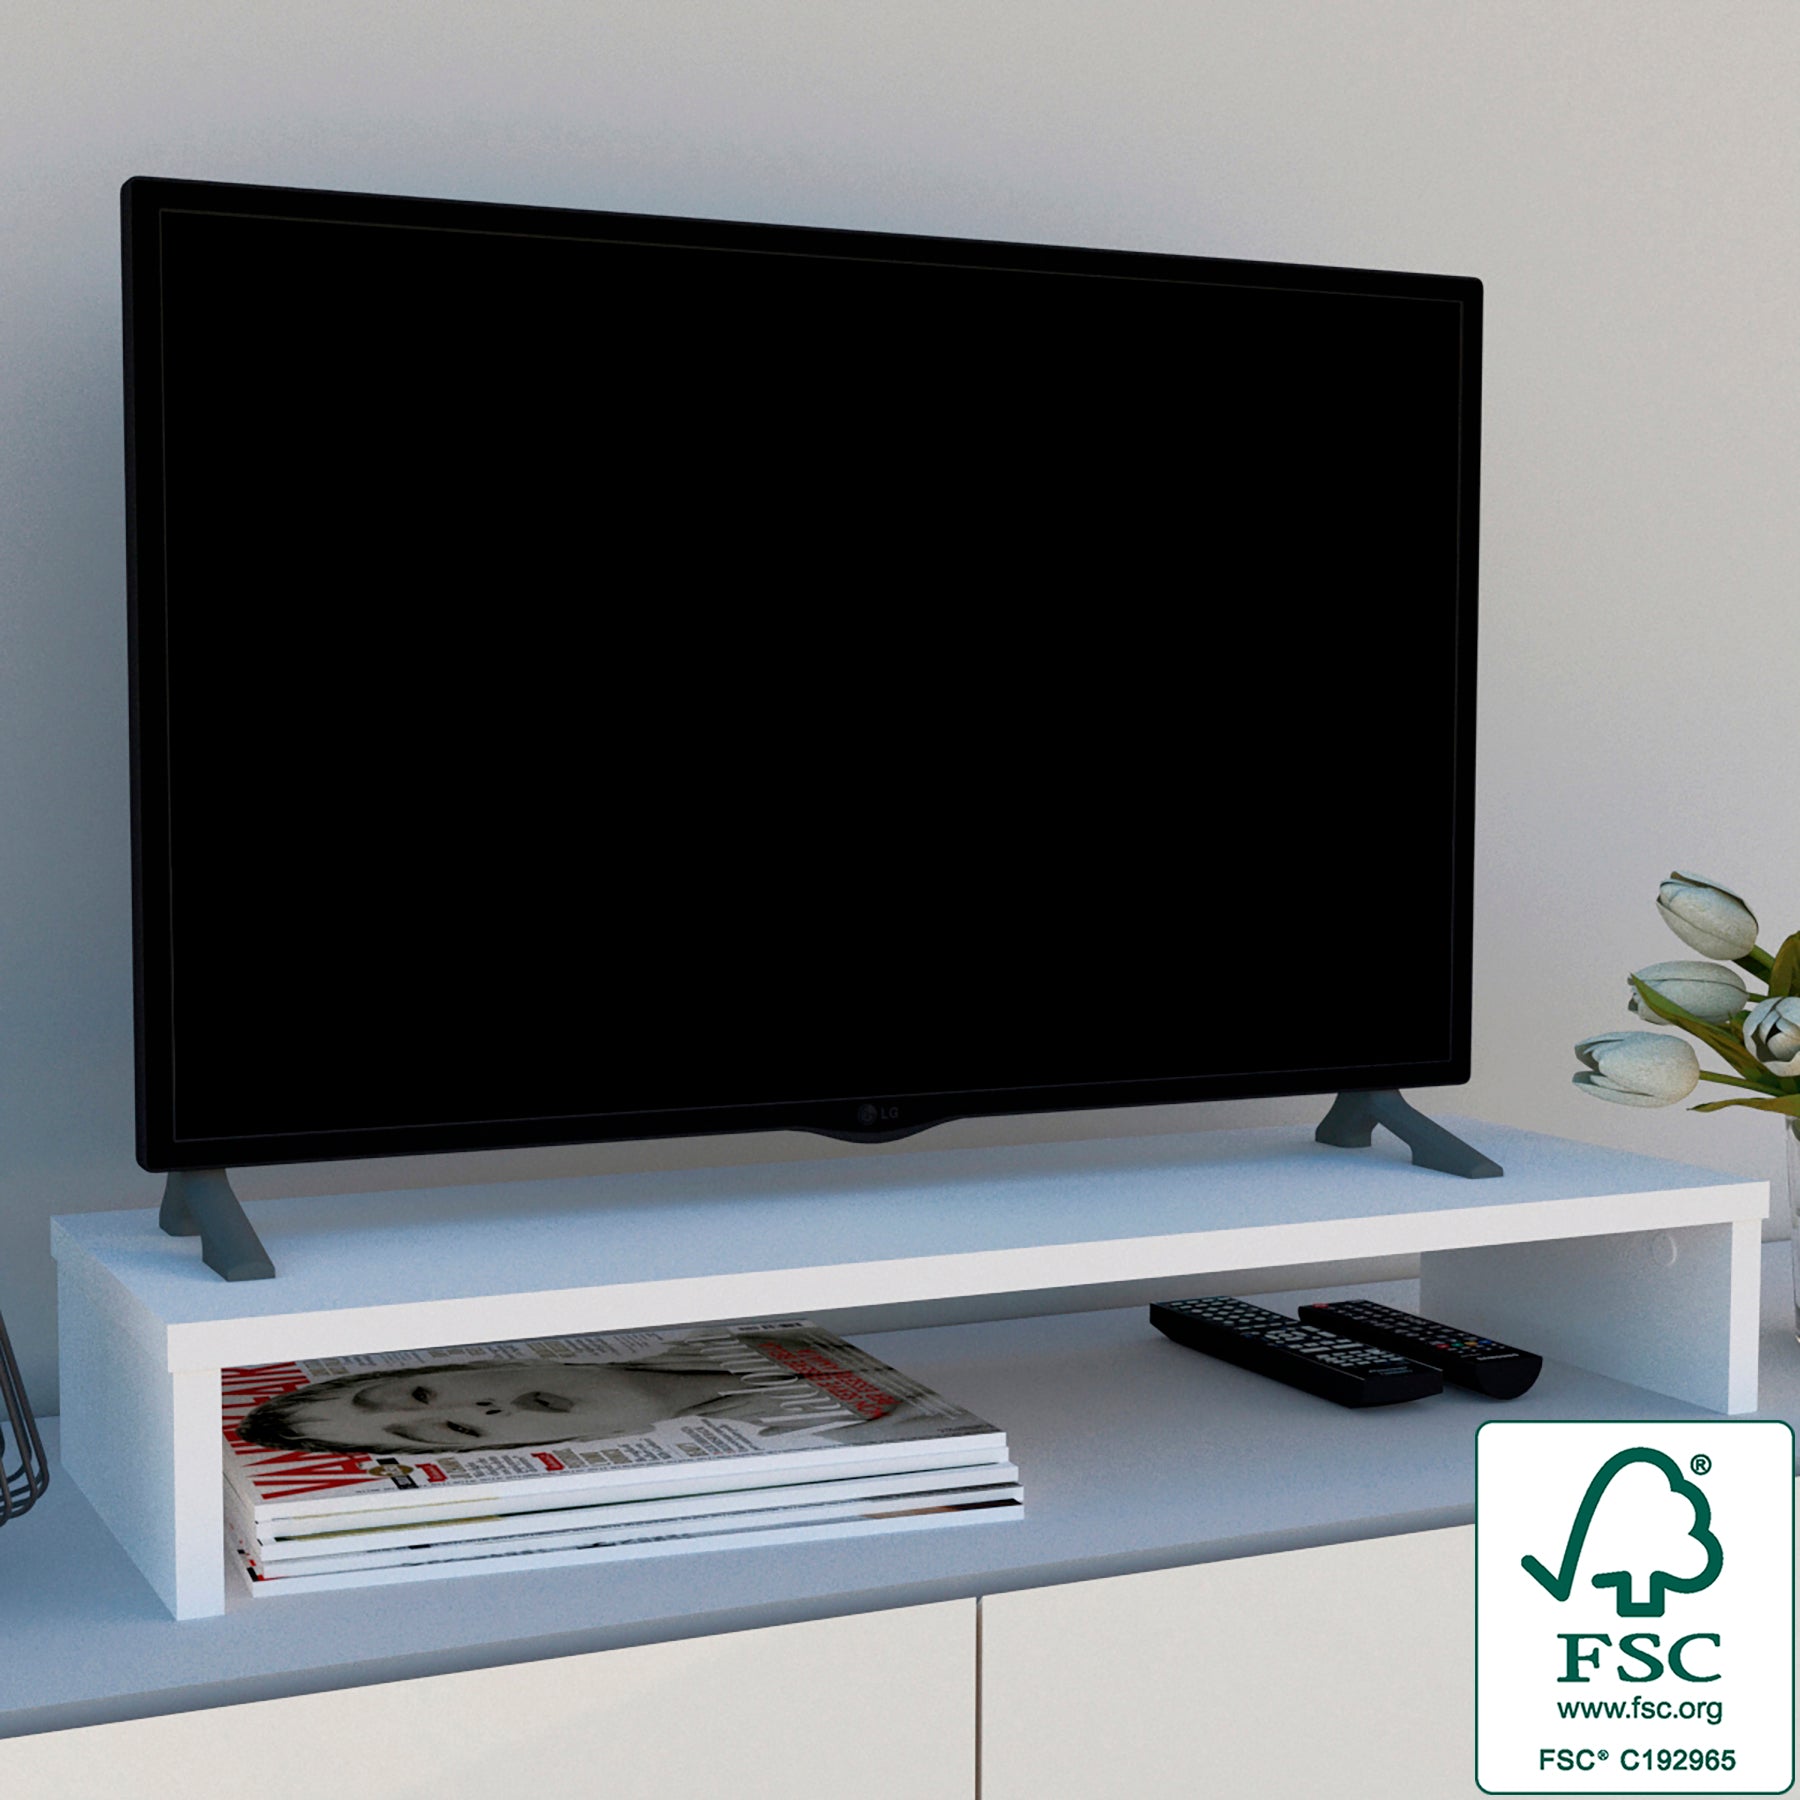 Soporte Monitor, Elevador TV de Madera FSC®. HENOR. 62x26.5x12 cm. Soporta  50 Kg. Blanco